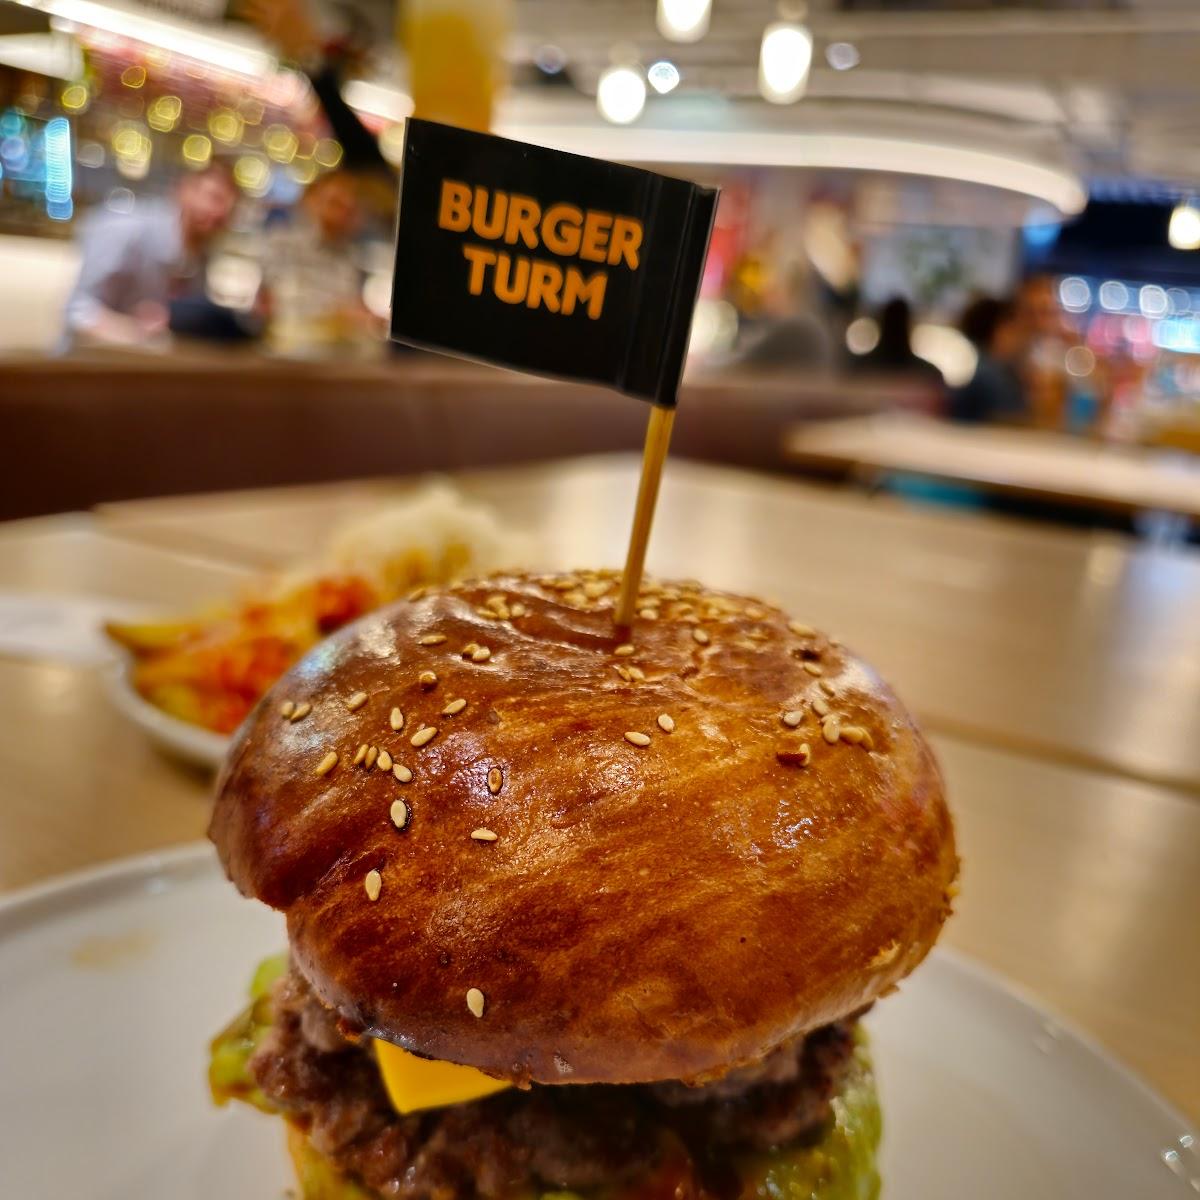 Restaurant "Burger Turm - The Playce" in Berlin